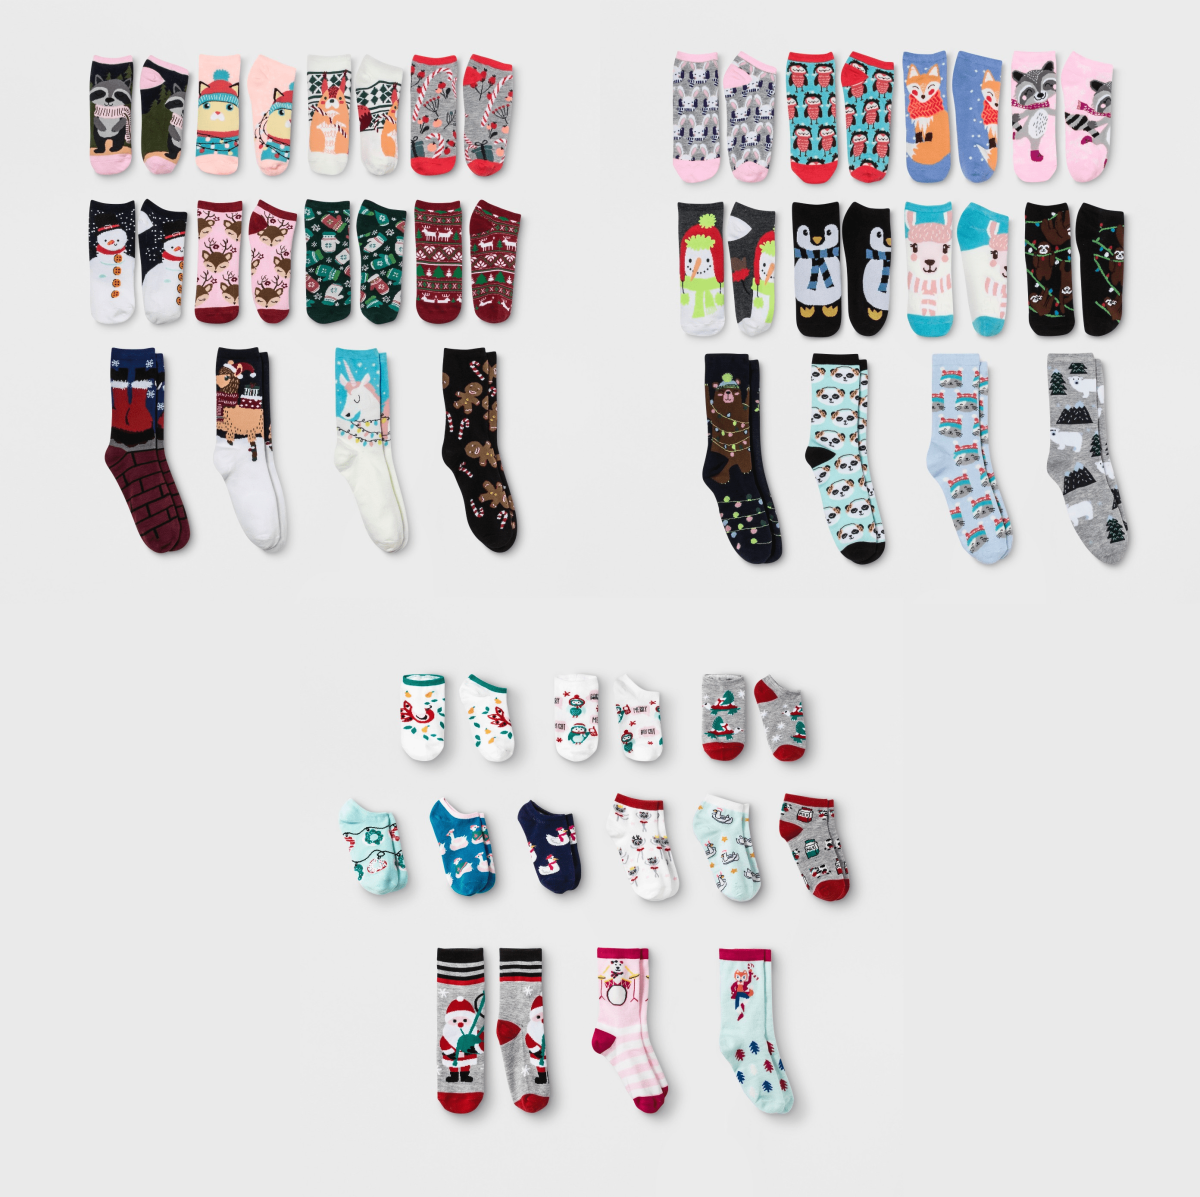 2018 Target Christmas Socks Advent Calendars Available Now! Hello